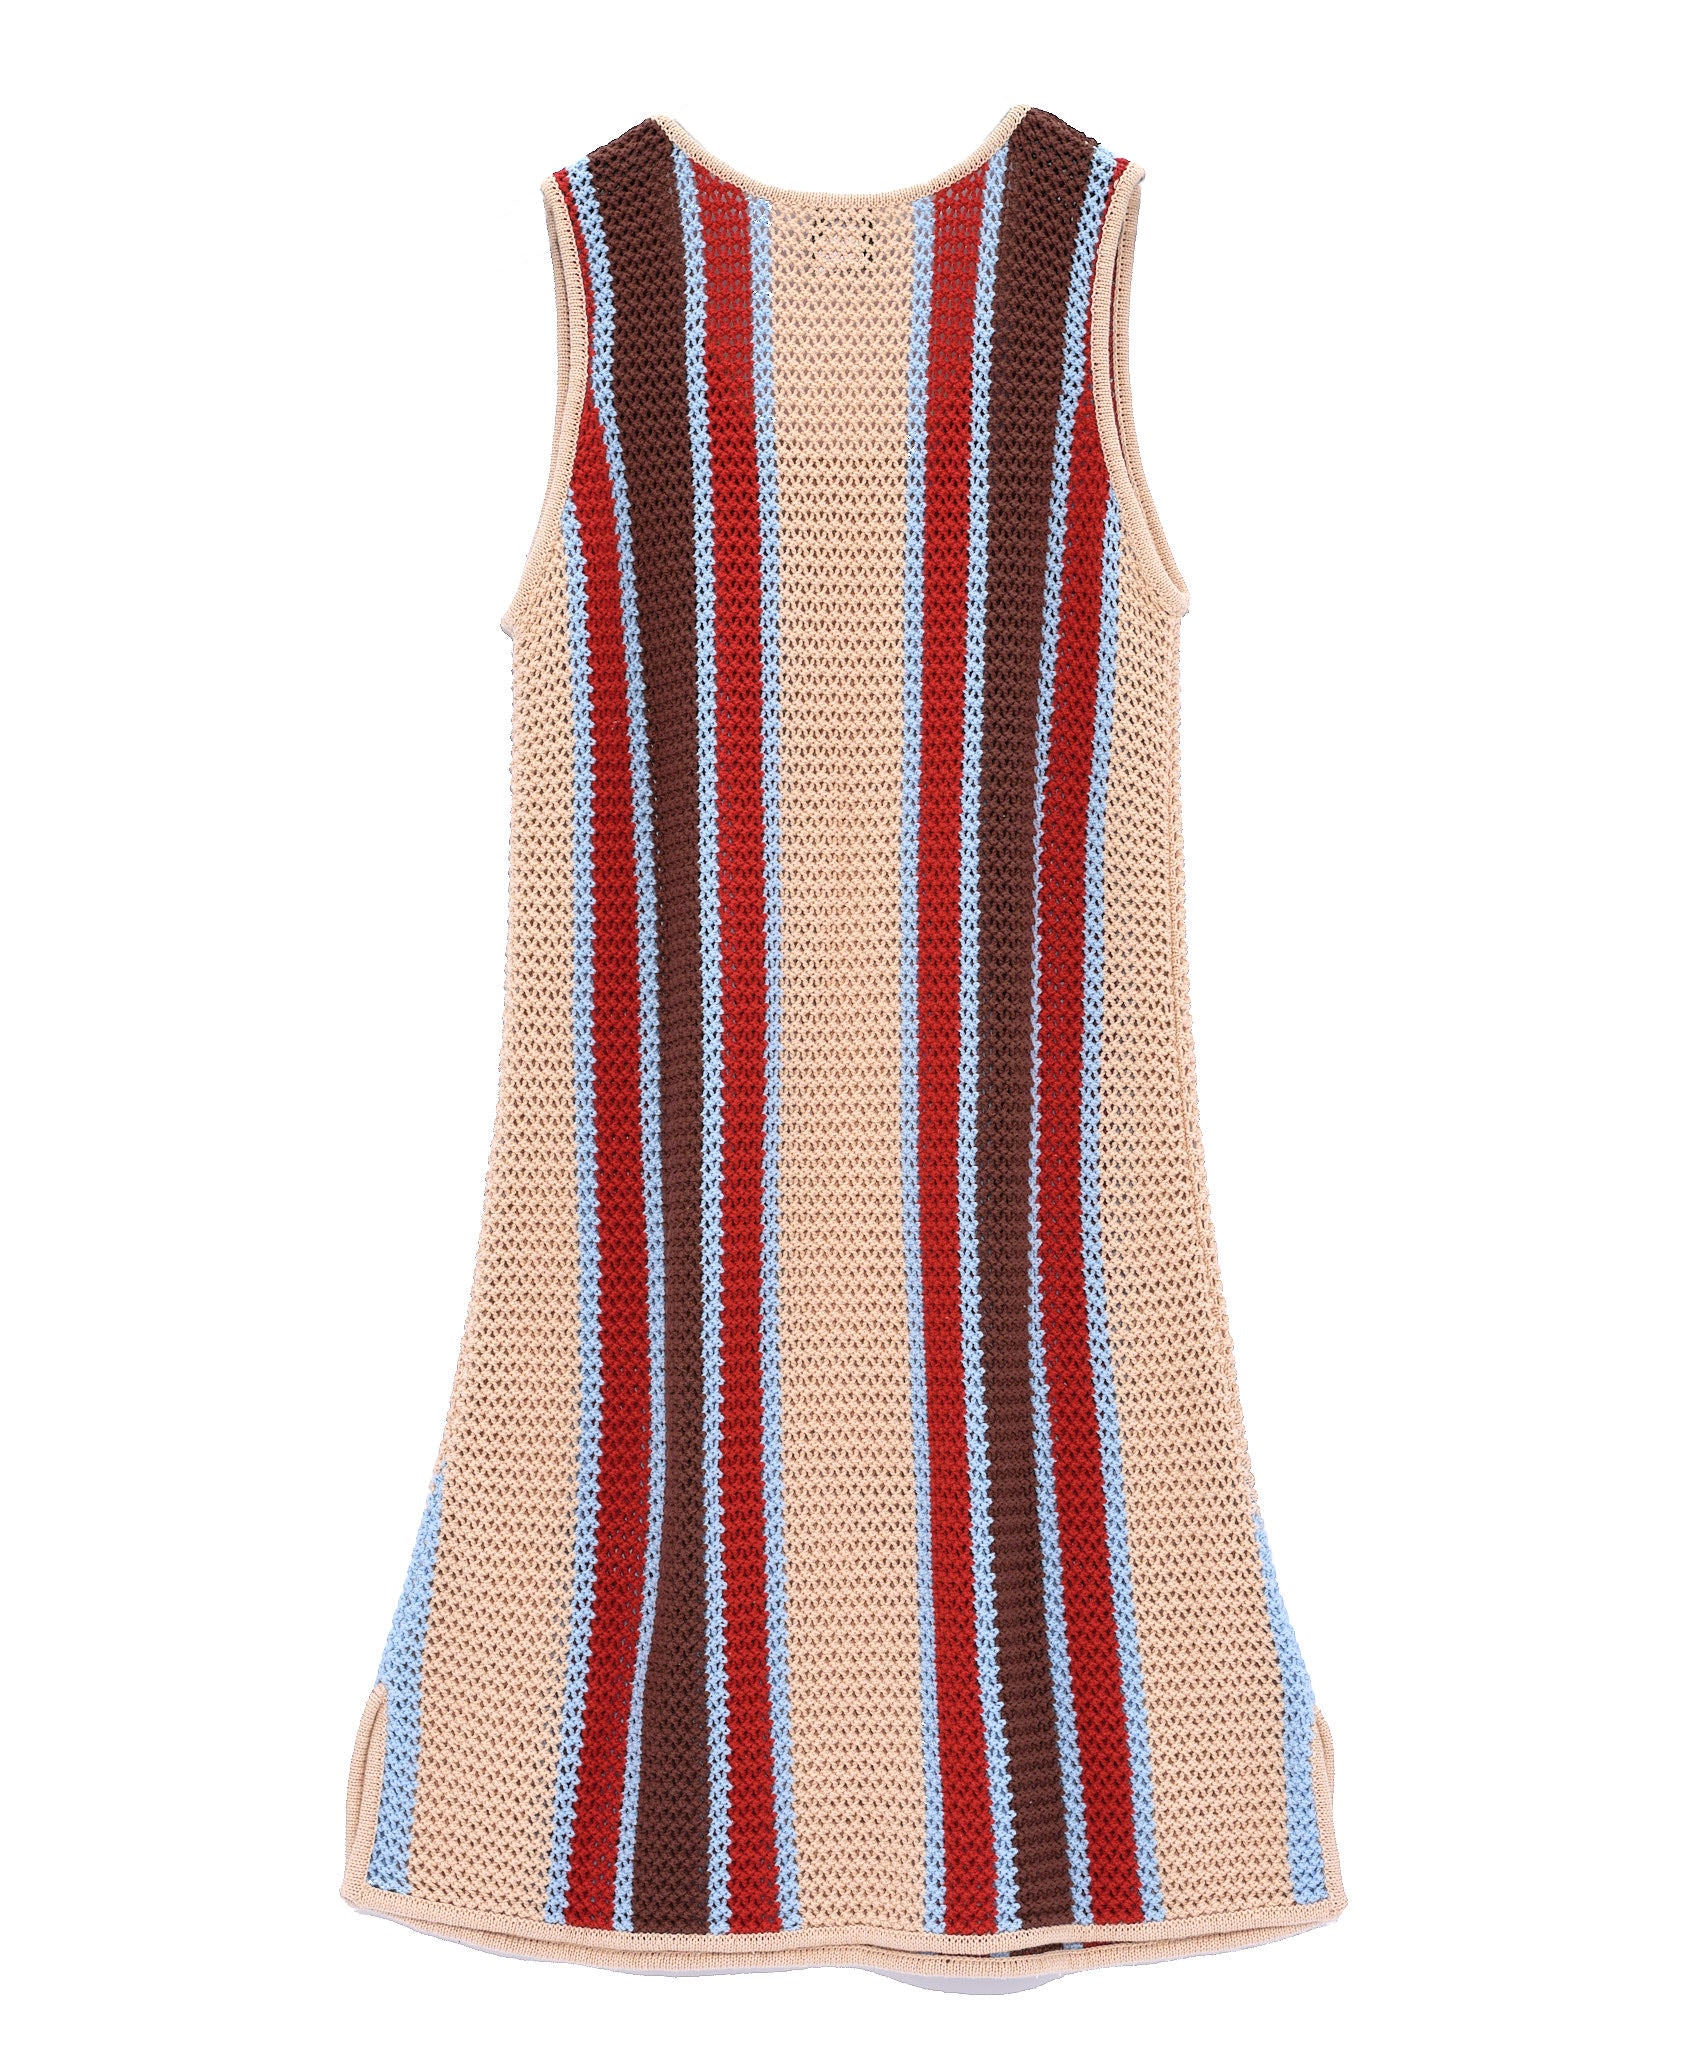 Adirondack Stripe Dress in color Sand